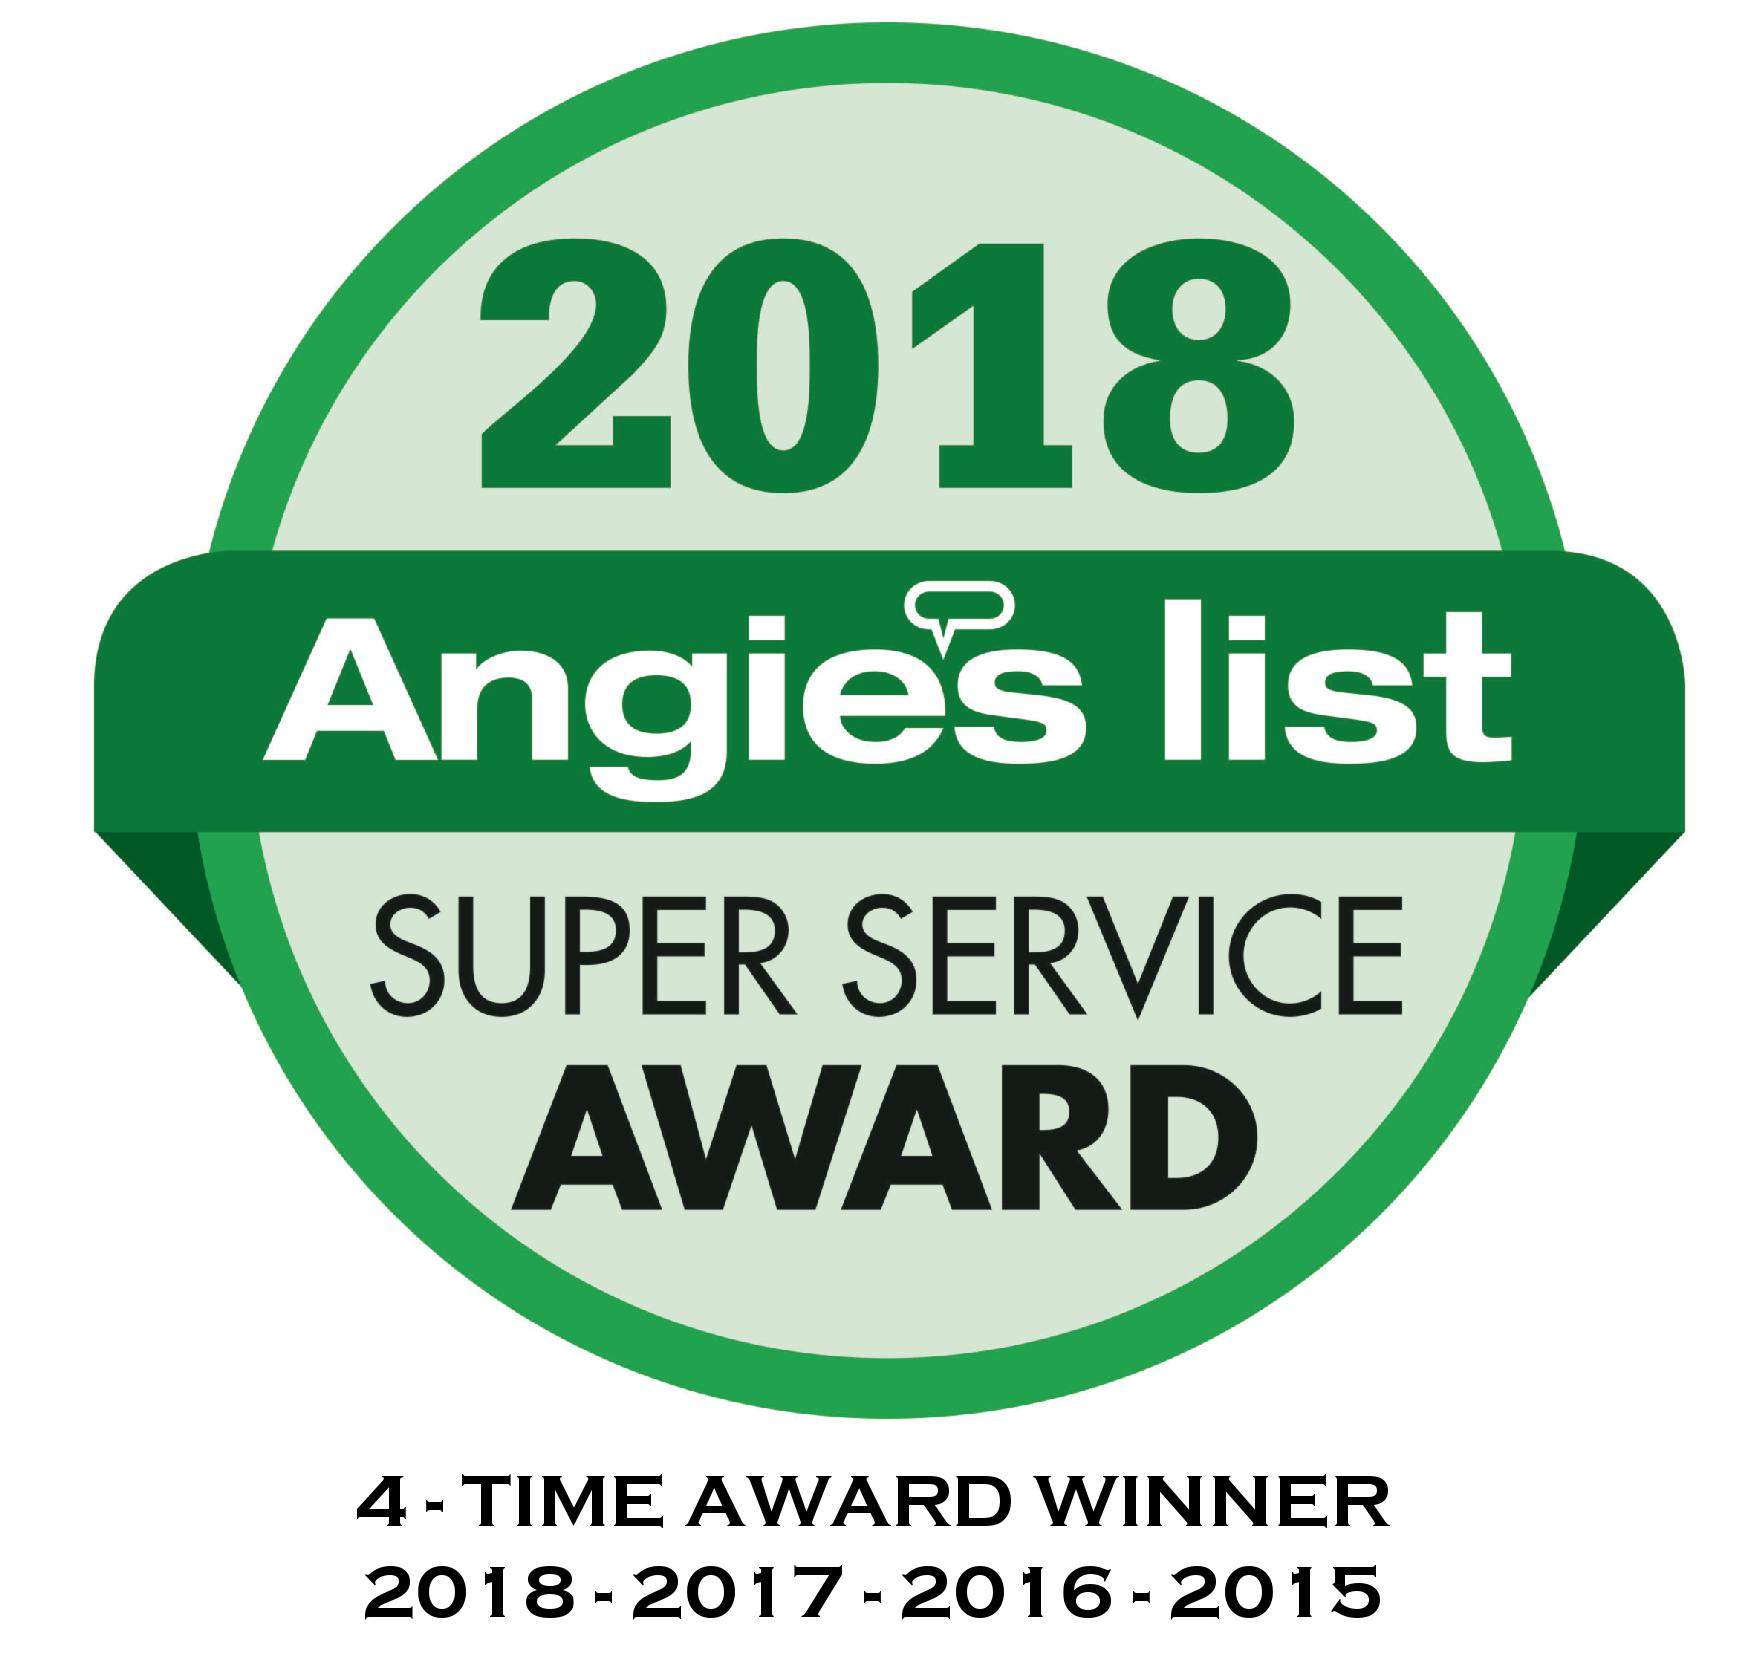 4-Time Winner Solar Optimum Earns 2018 Angie’s List Super Service Award